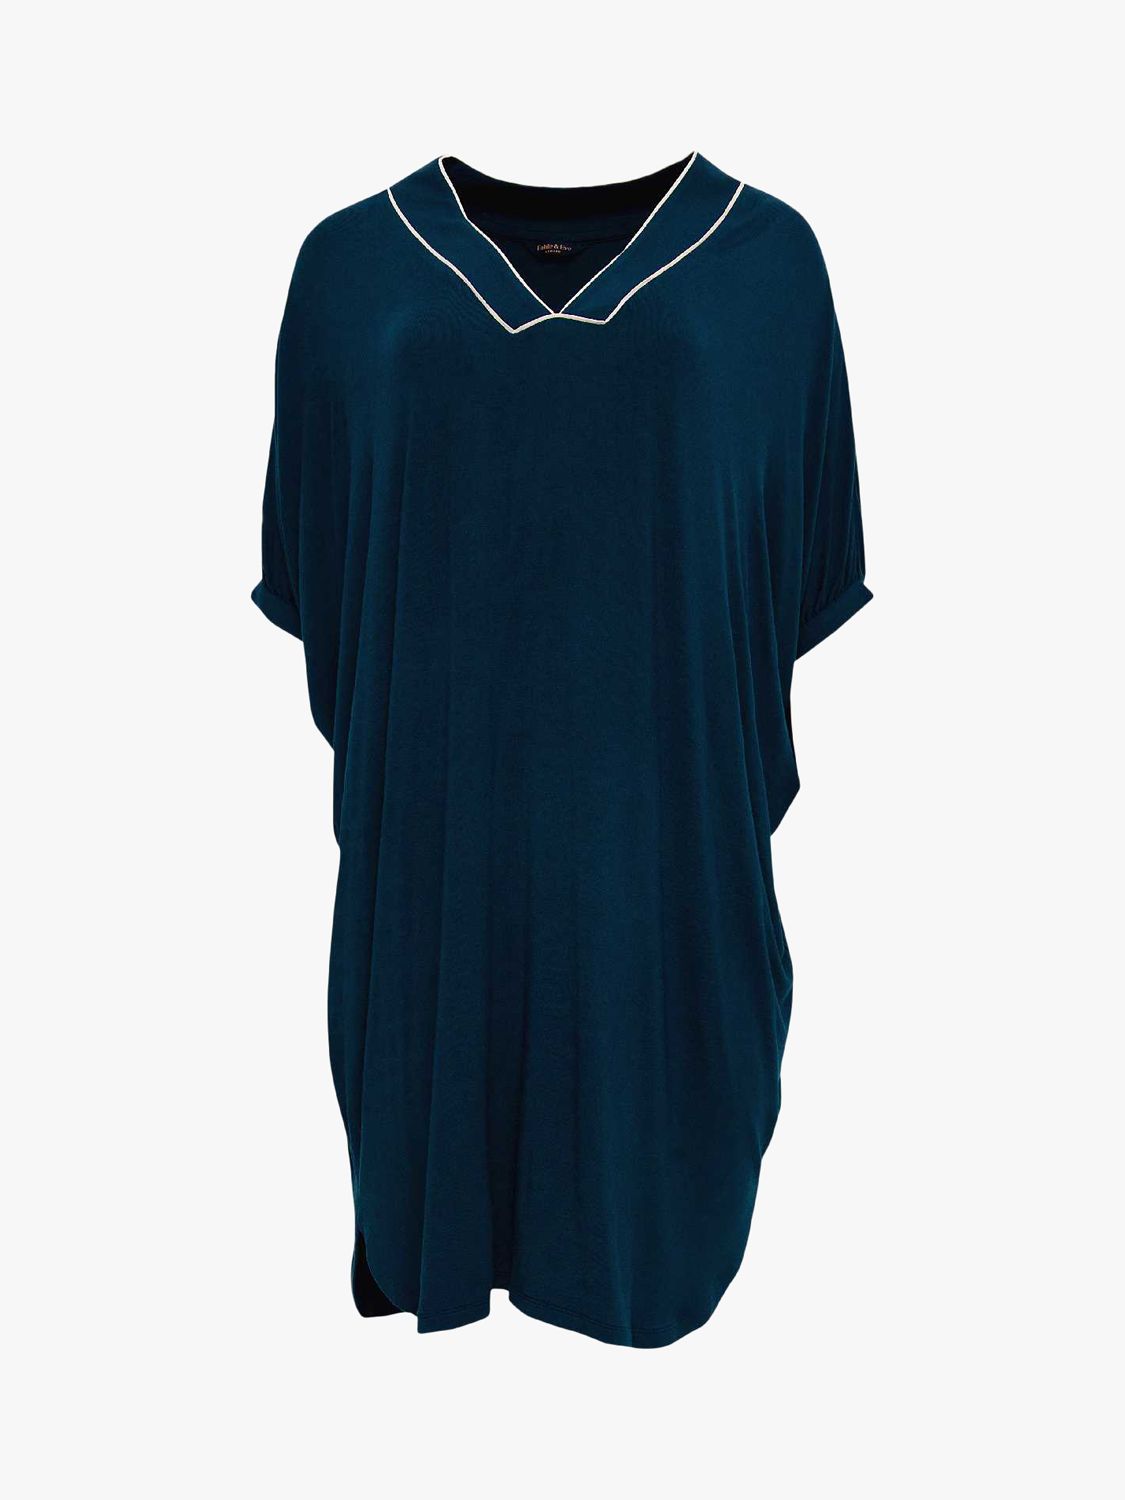 Buy Fable & Eve Spitalfields Short Sleeve Cotton Blend Nightshirt, Navy Blue Online at johnlewis.com